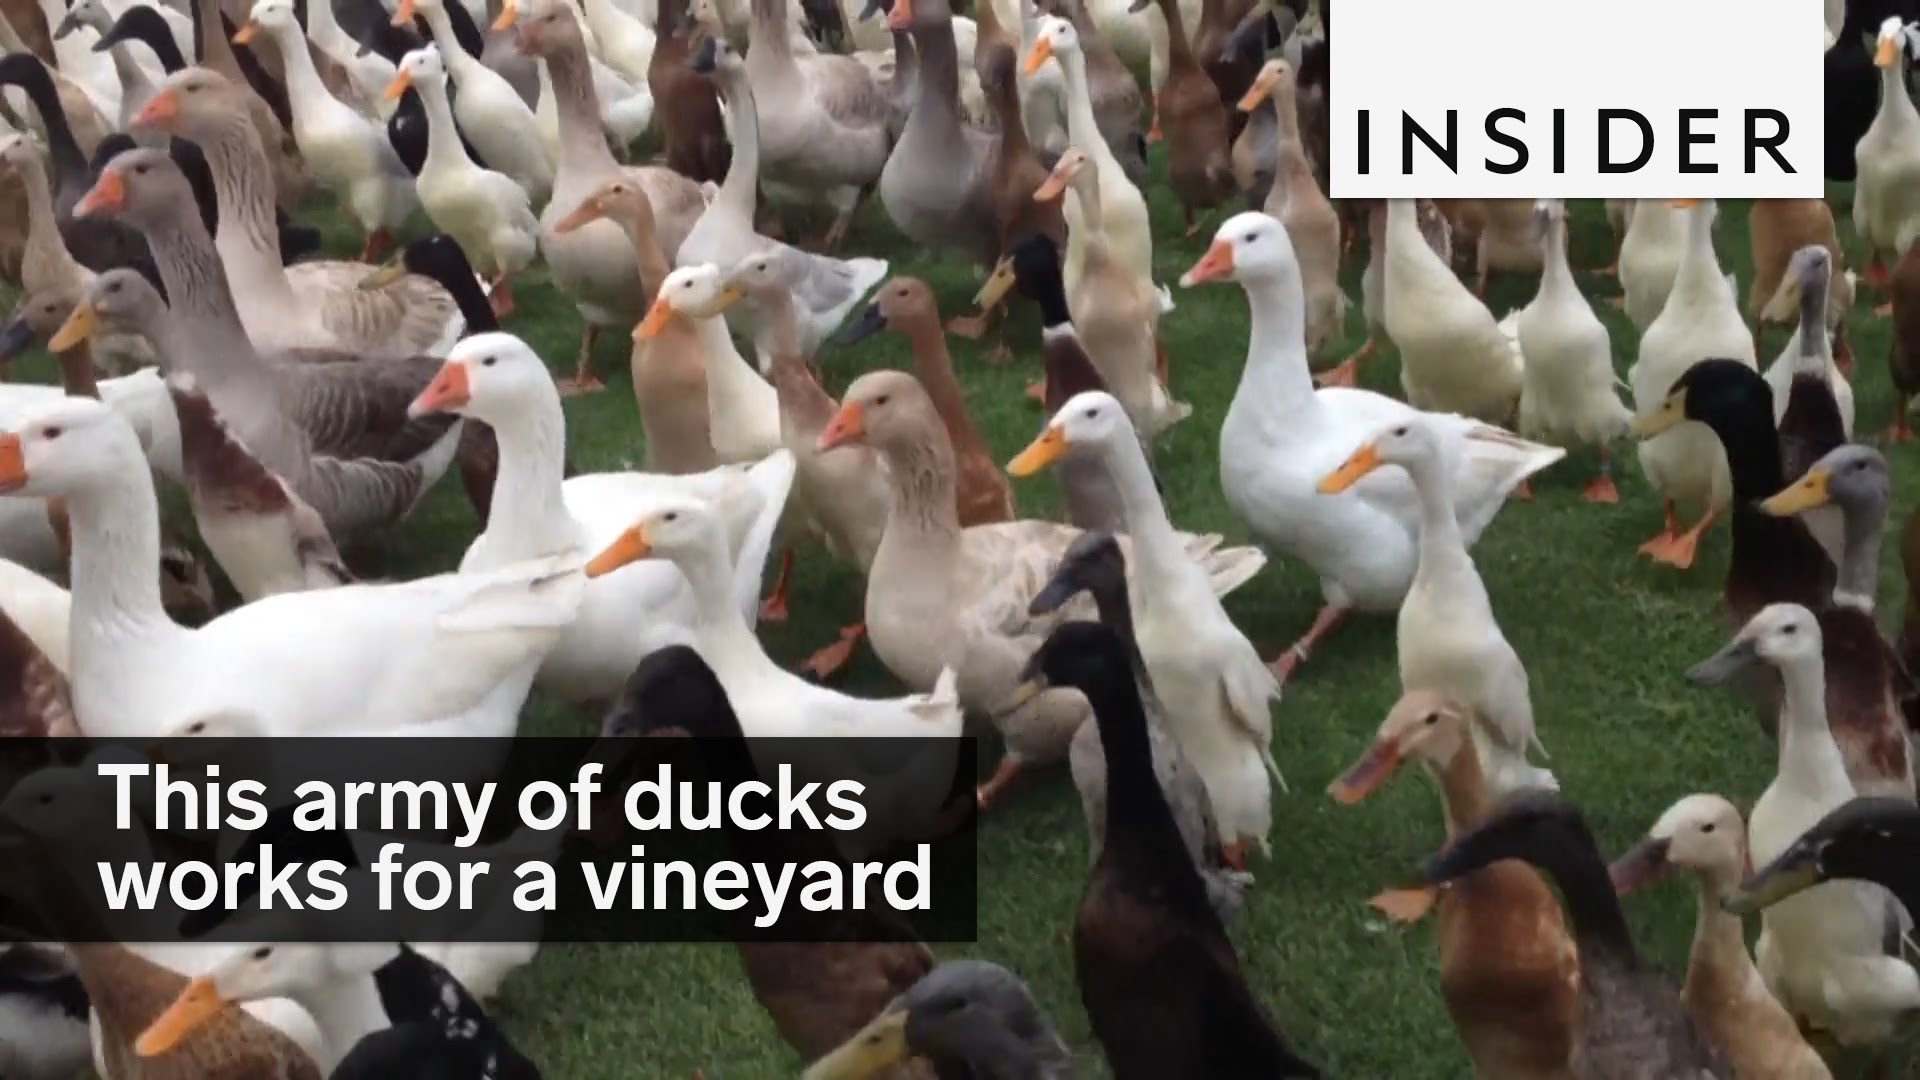 A vineyard employs 900 ducks - YouTube